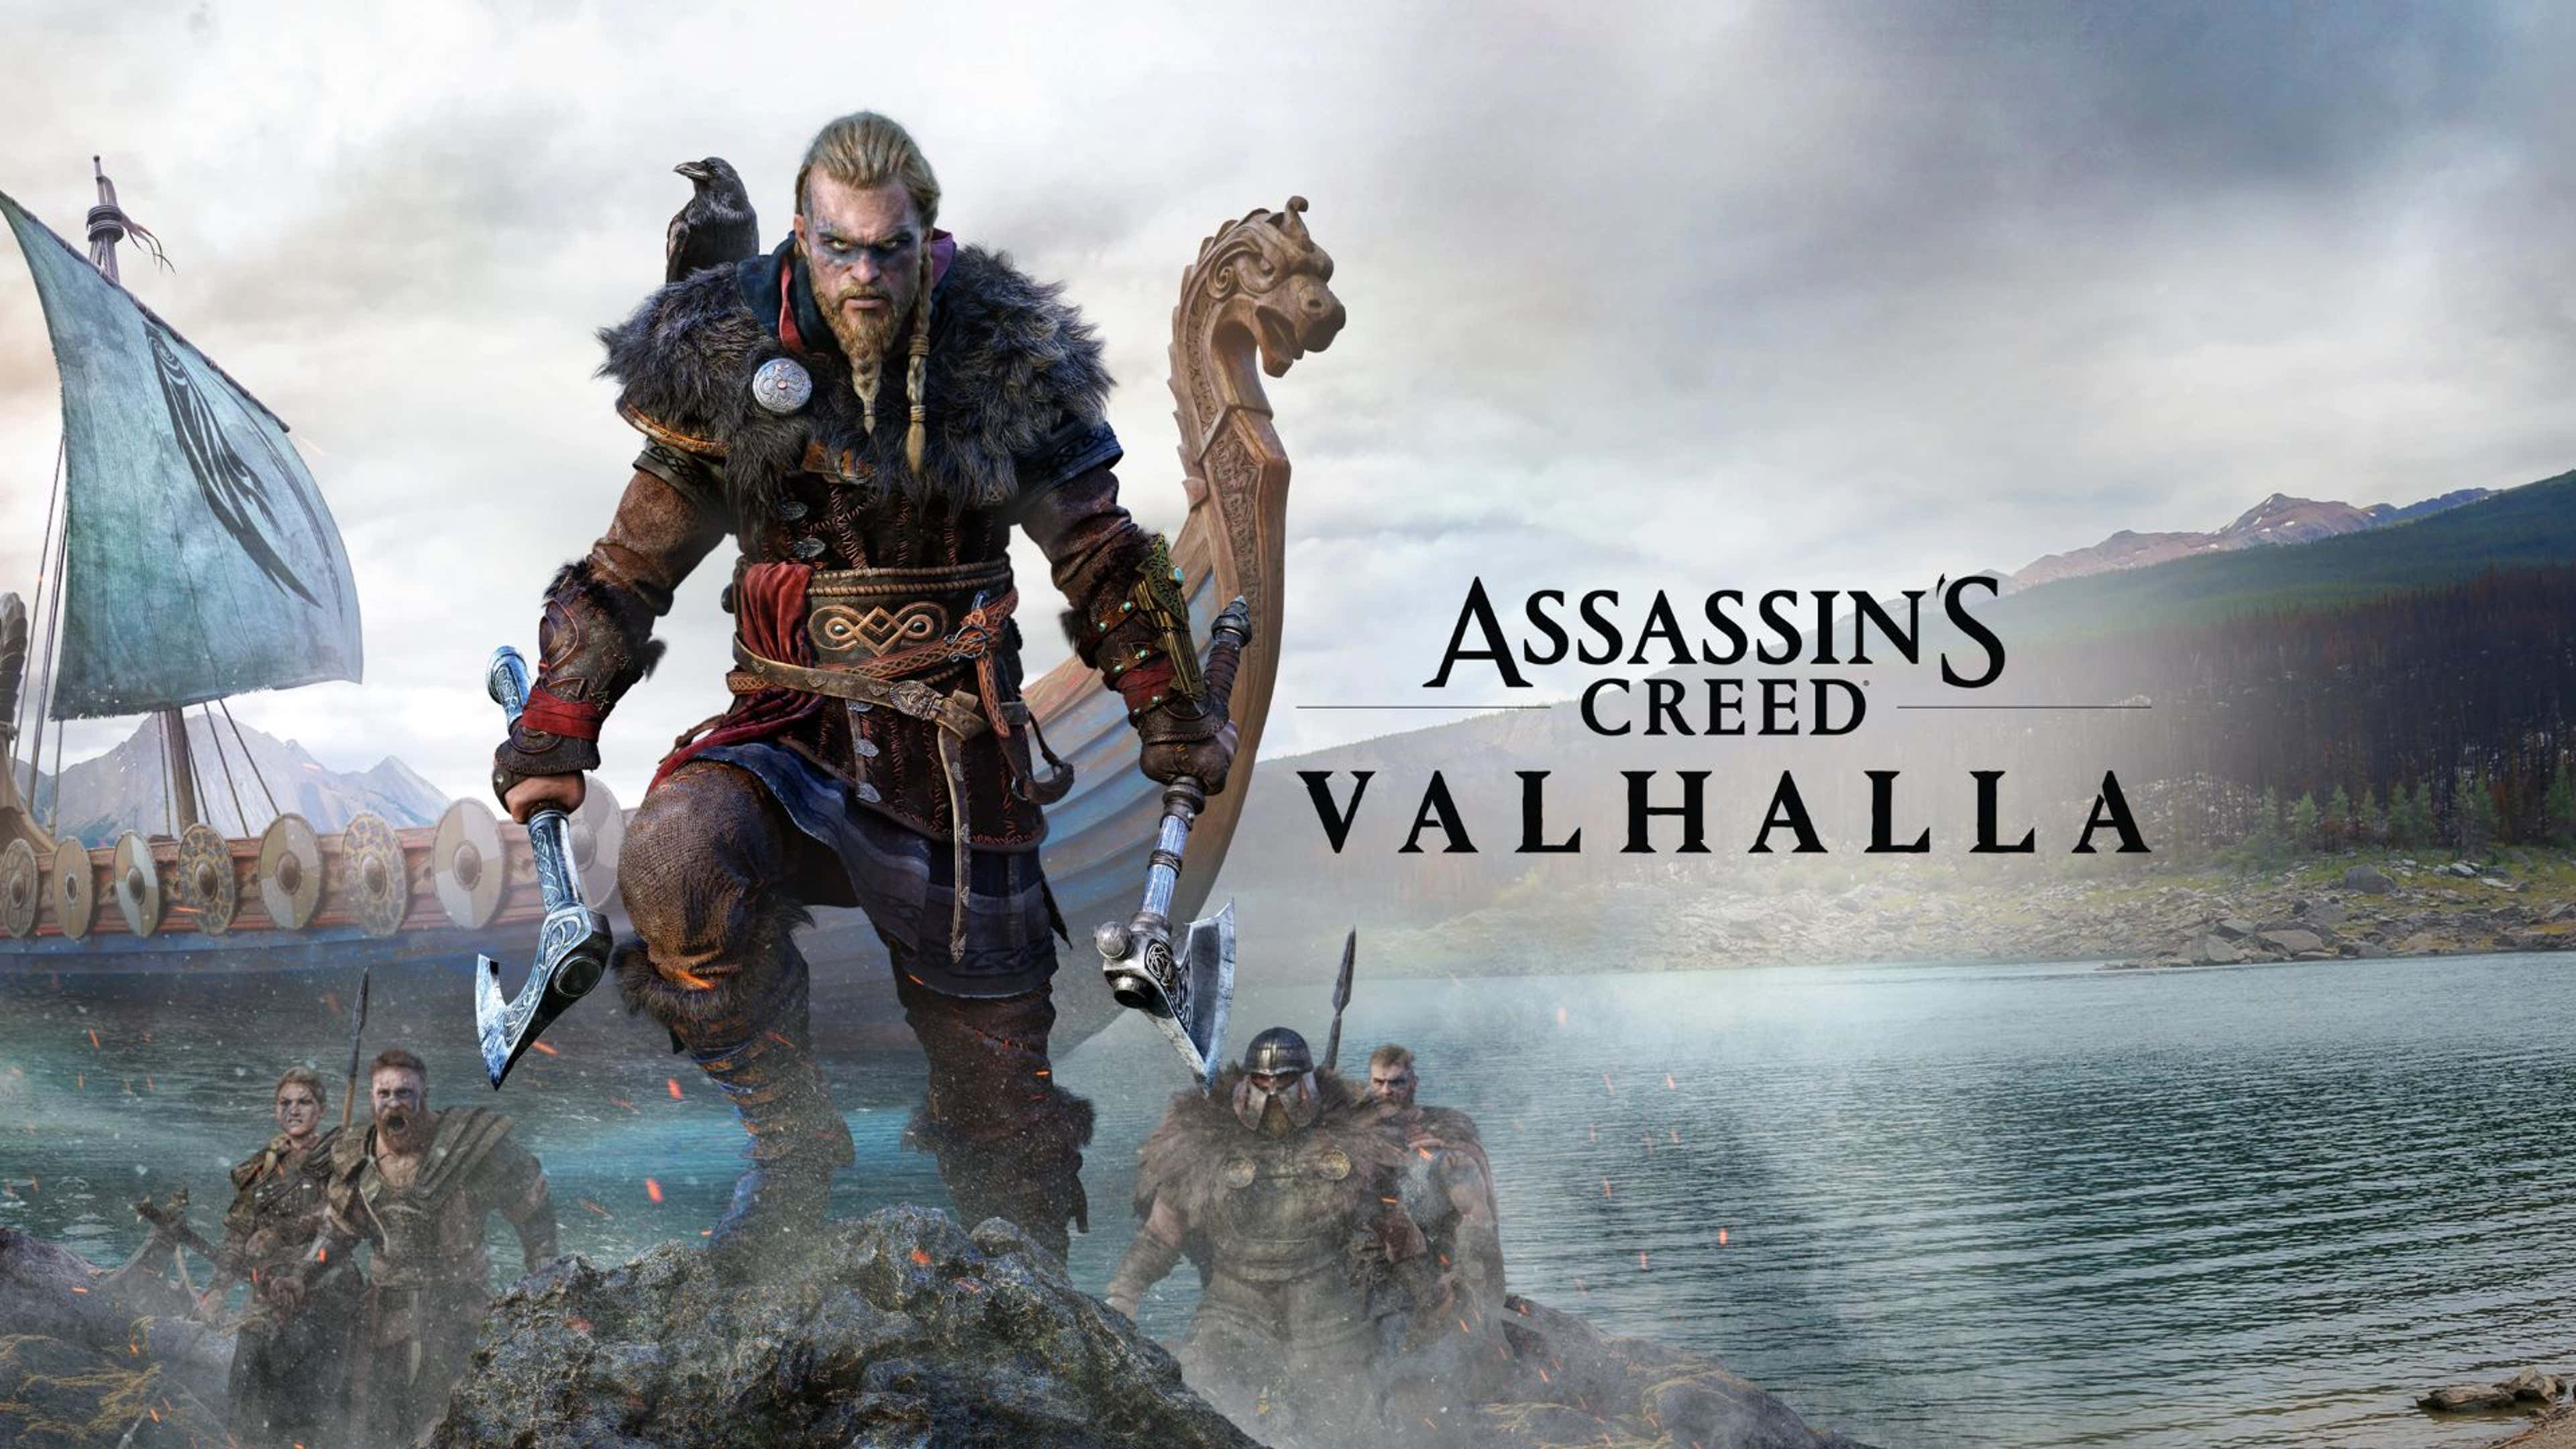 Comprar Assassin's Creed Valhalla Xbox One Barato Comparar Preços